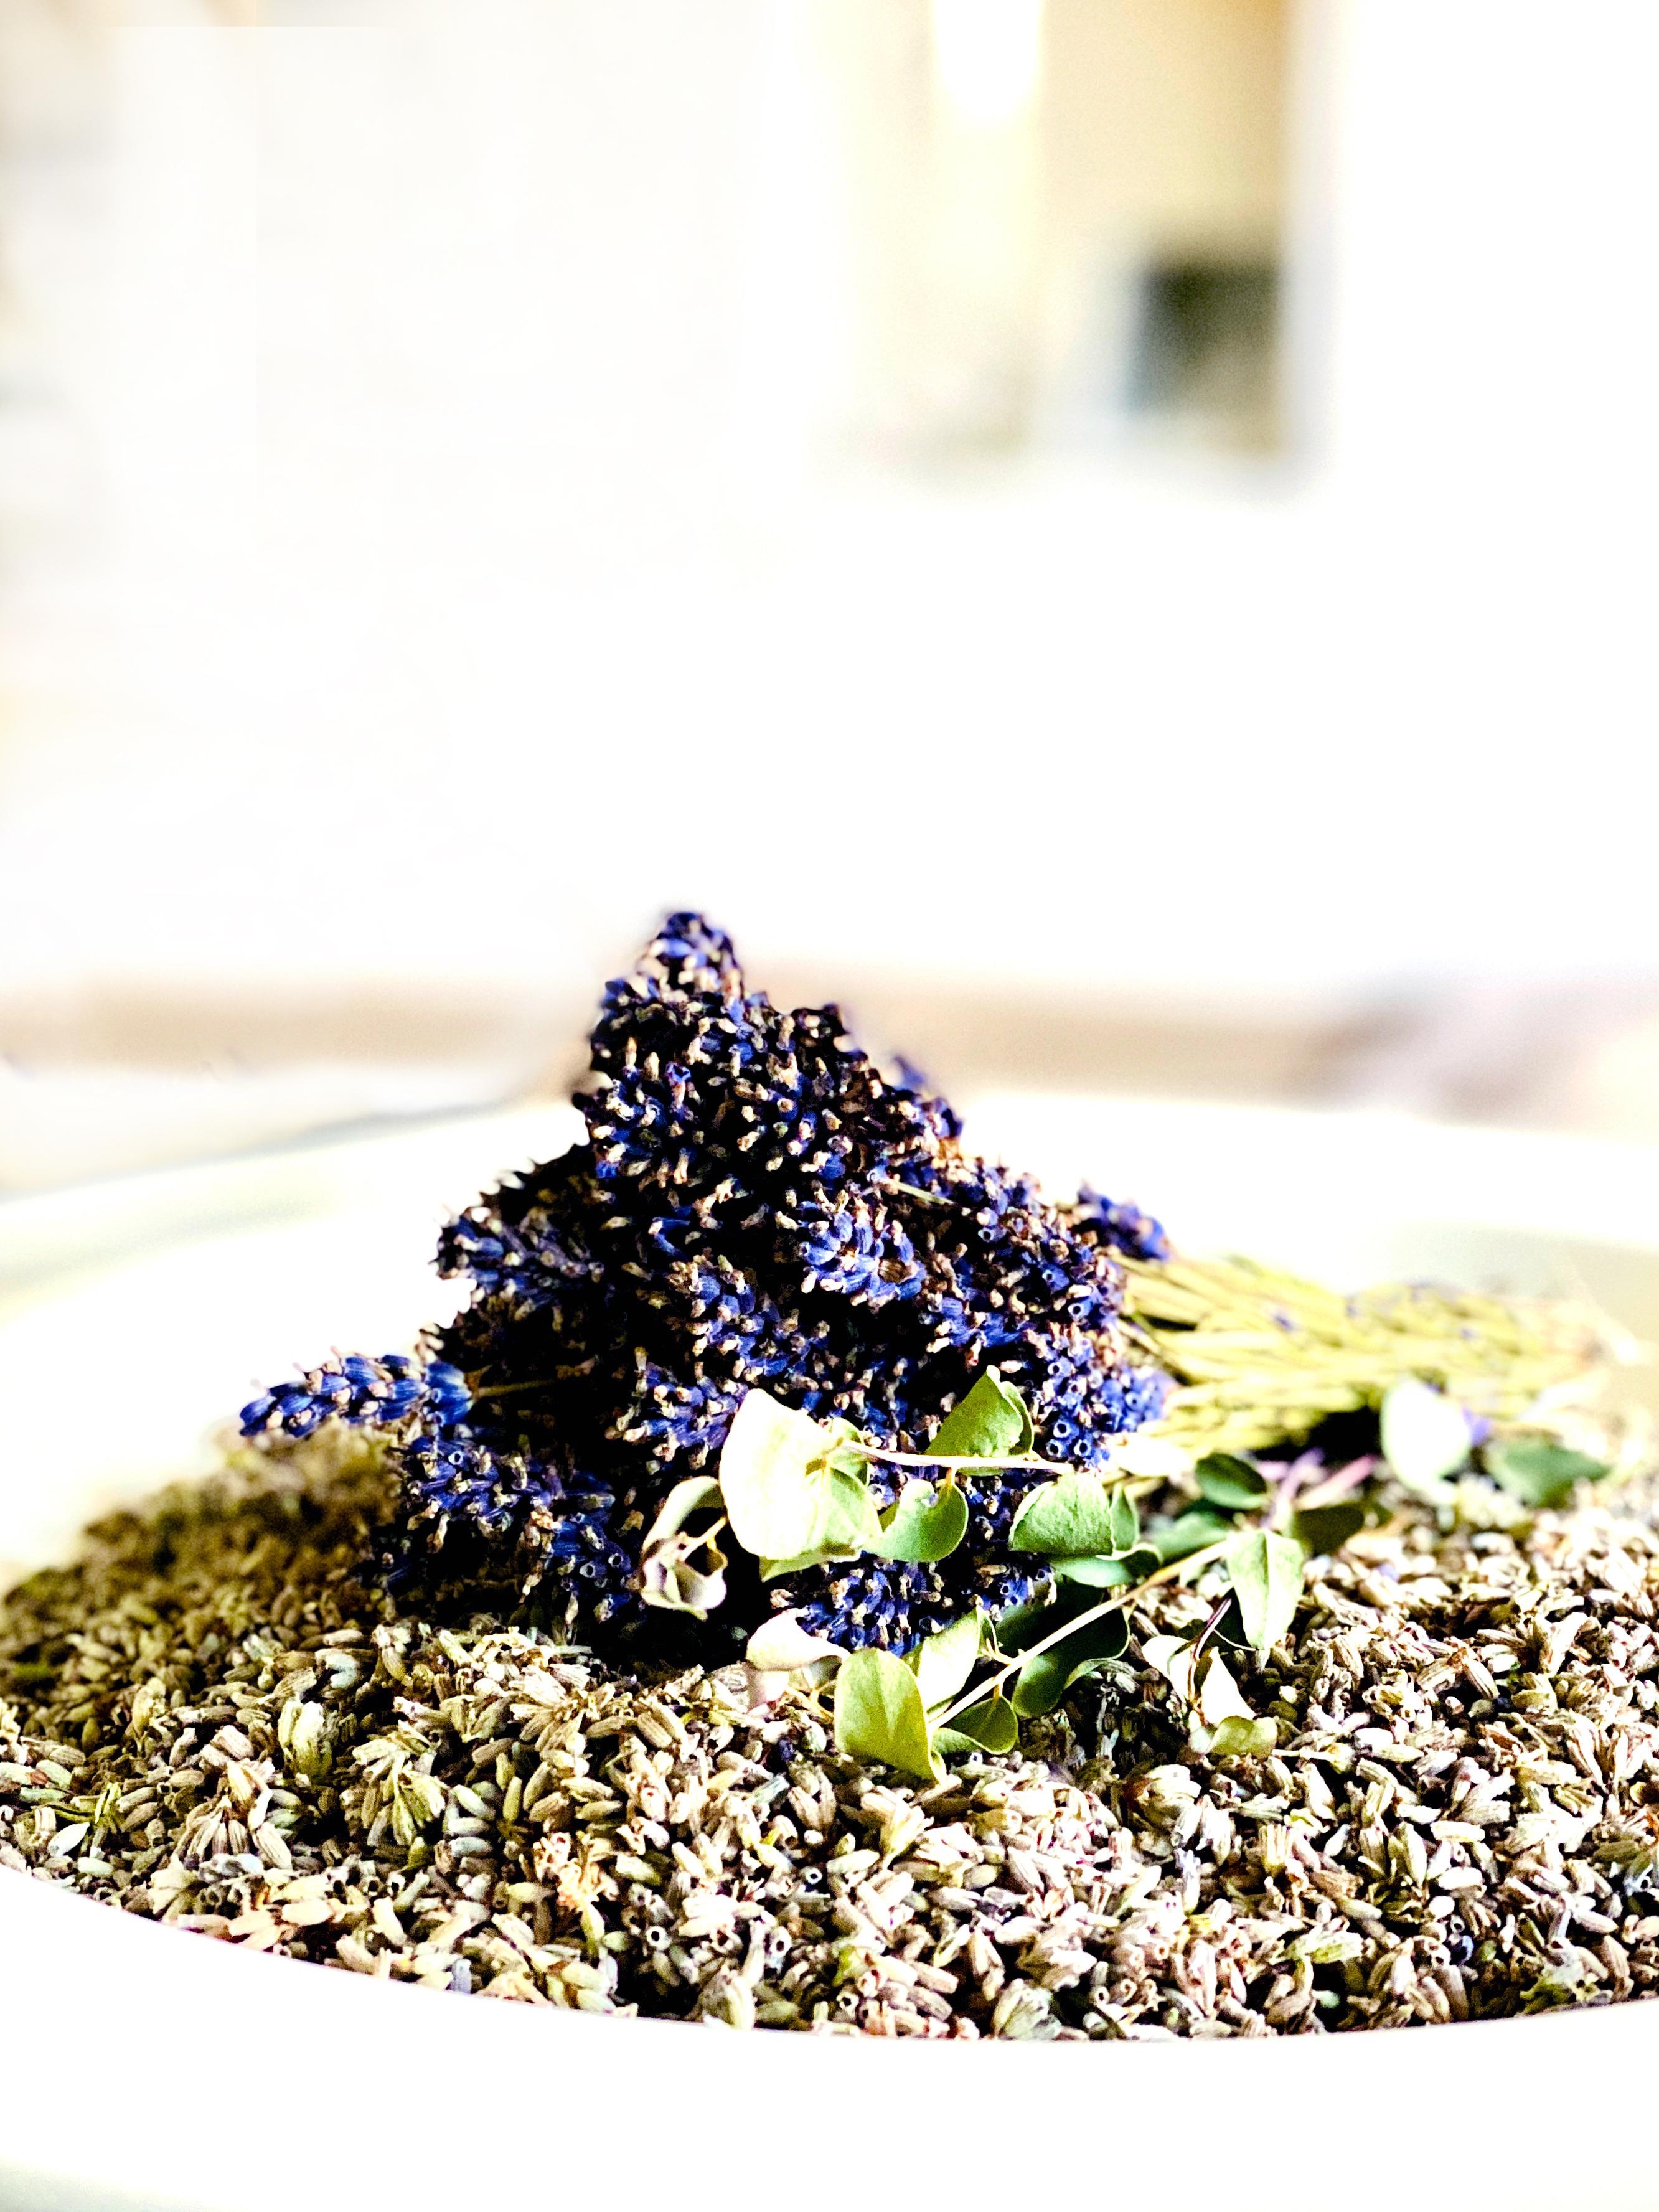 Duftende Deko ...
#lavendel #deko #blumenliebe #blumenausdemgarten #cozyliving 